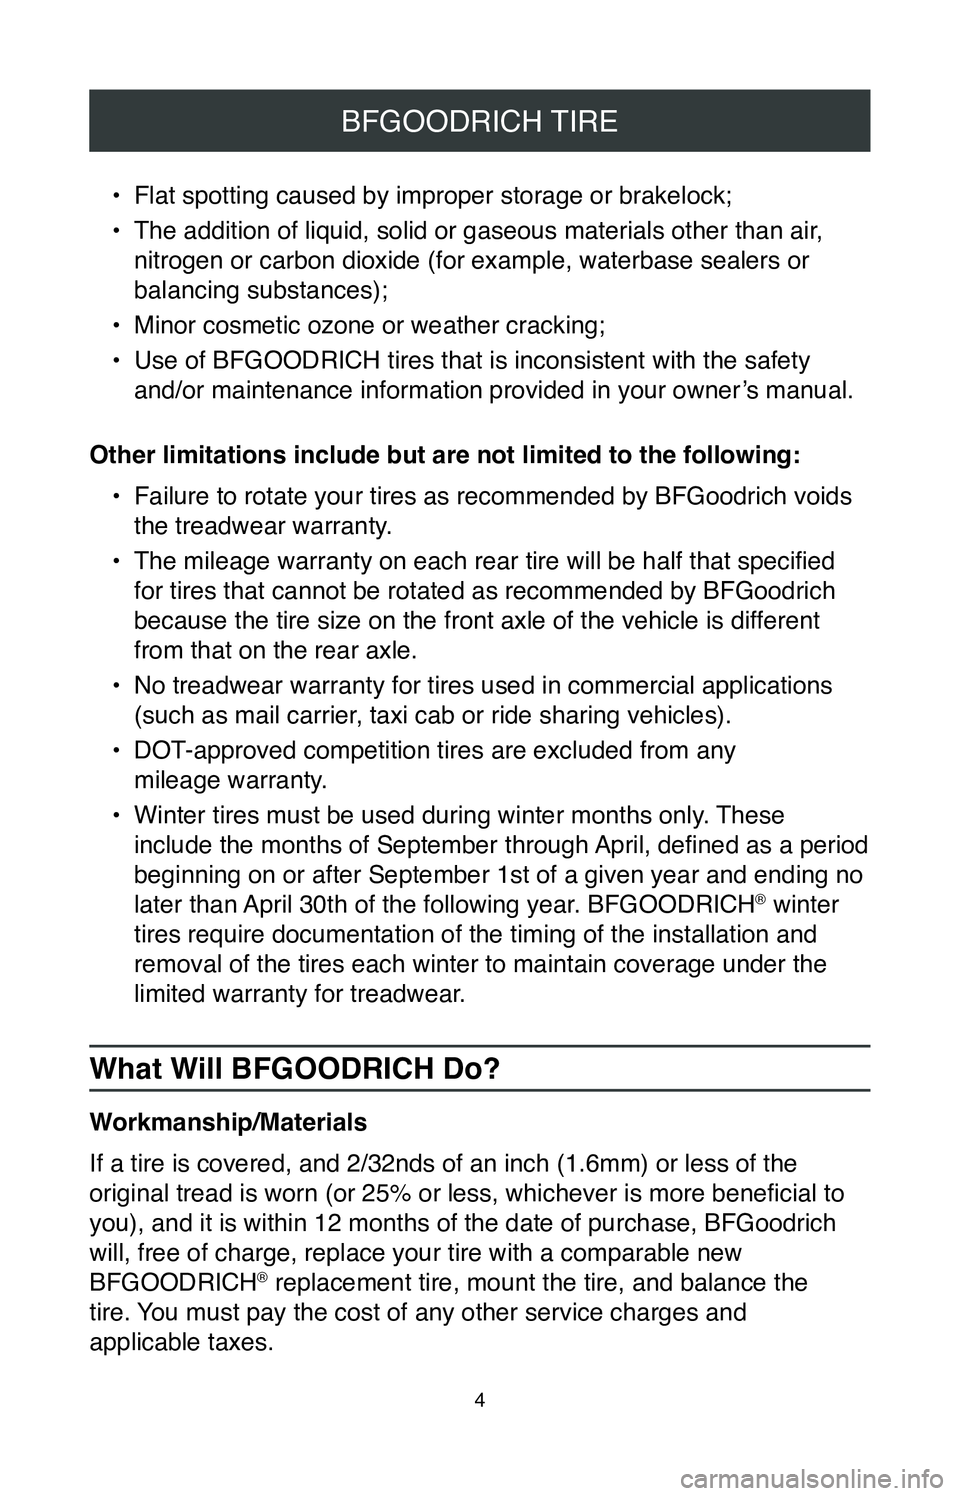 TOYOTA CAMRY 2020  Warranties & Maintenance Guides (in English) 4
BFGOODRICH TIRE
